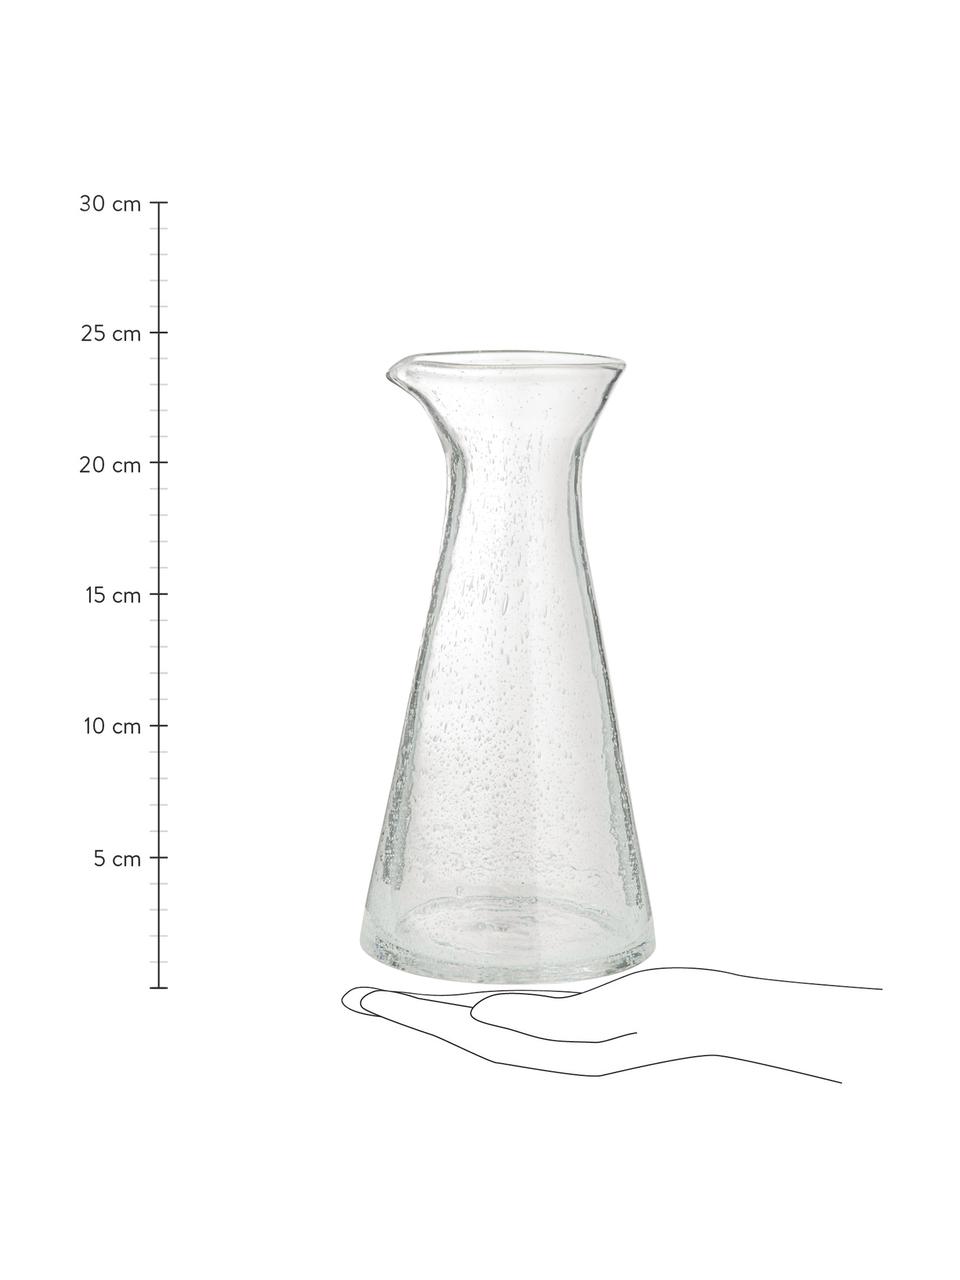 Mondgeblazen karaf Bubble met decoratieve luchtbellen, 800 ml, Mondgeblazen glas, Transparant, H 25 cm, 800 ml